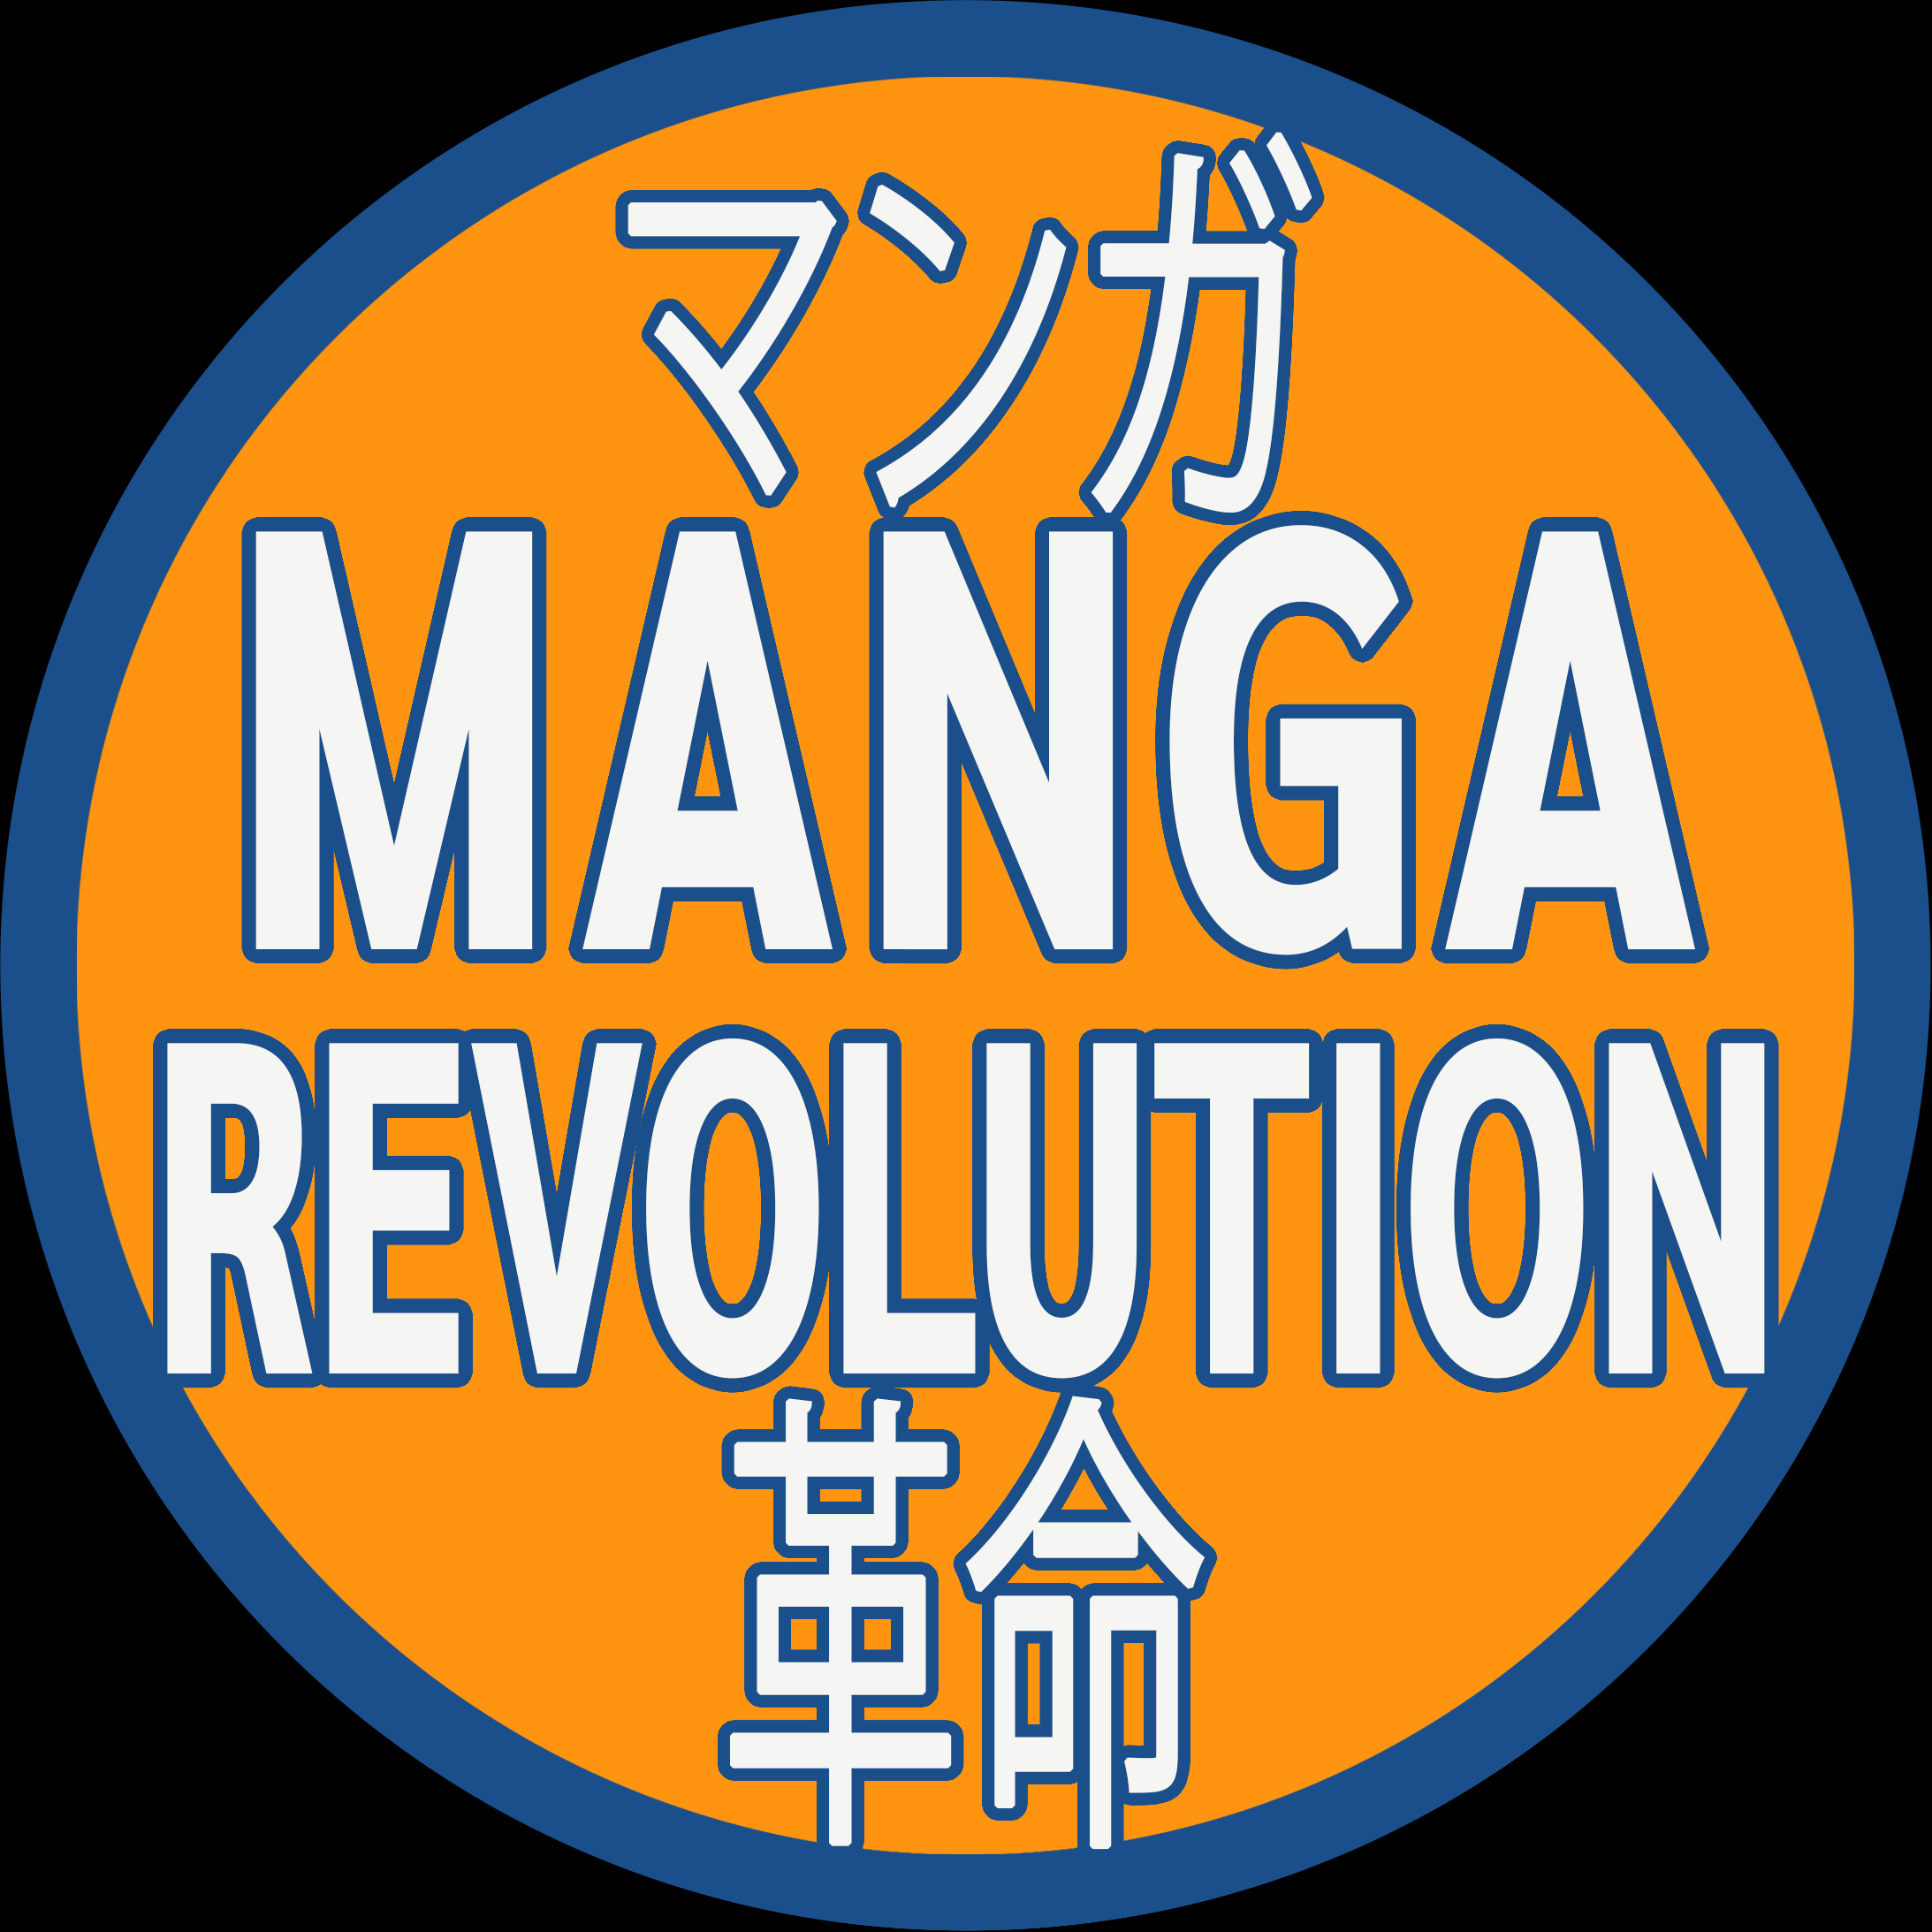 Chainsaw Man Chapter 98 Review + Yusei Matsui's The Elusive Samurai Review - Manga Revolution Podcast Episode 33